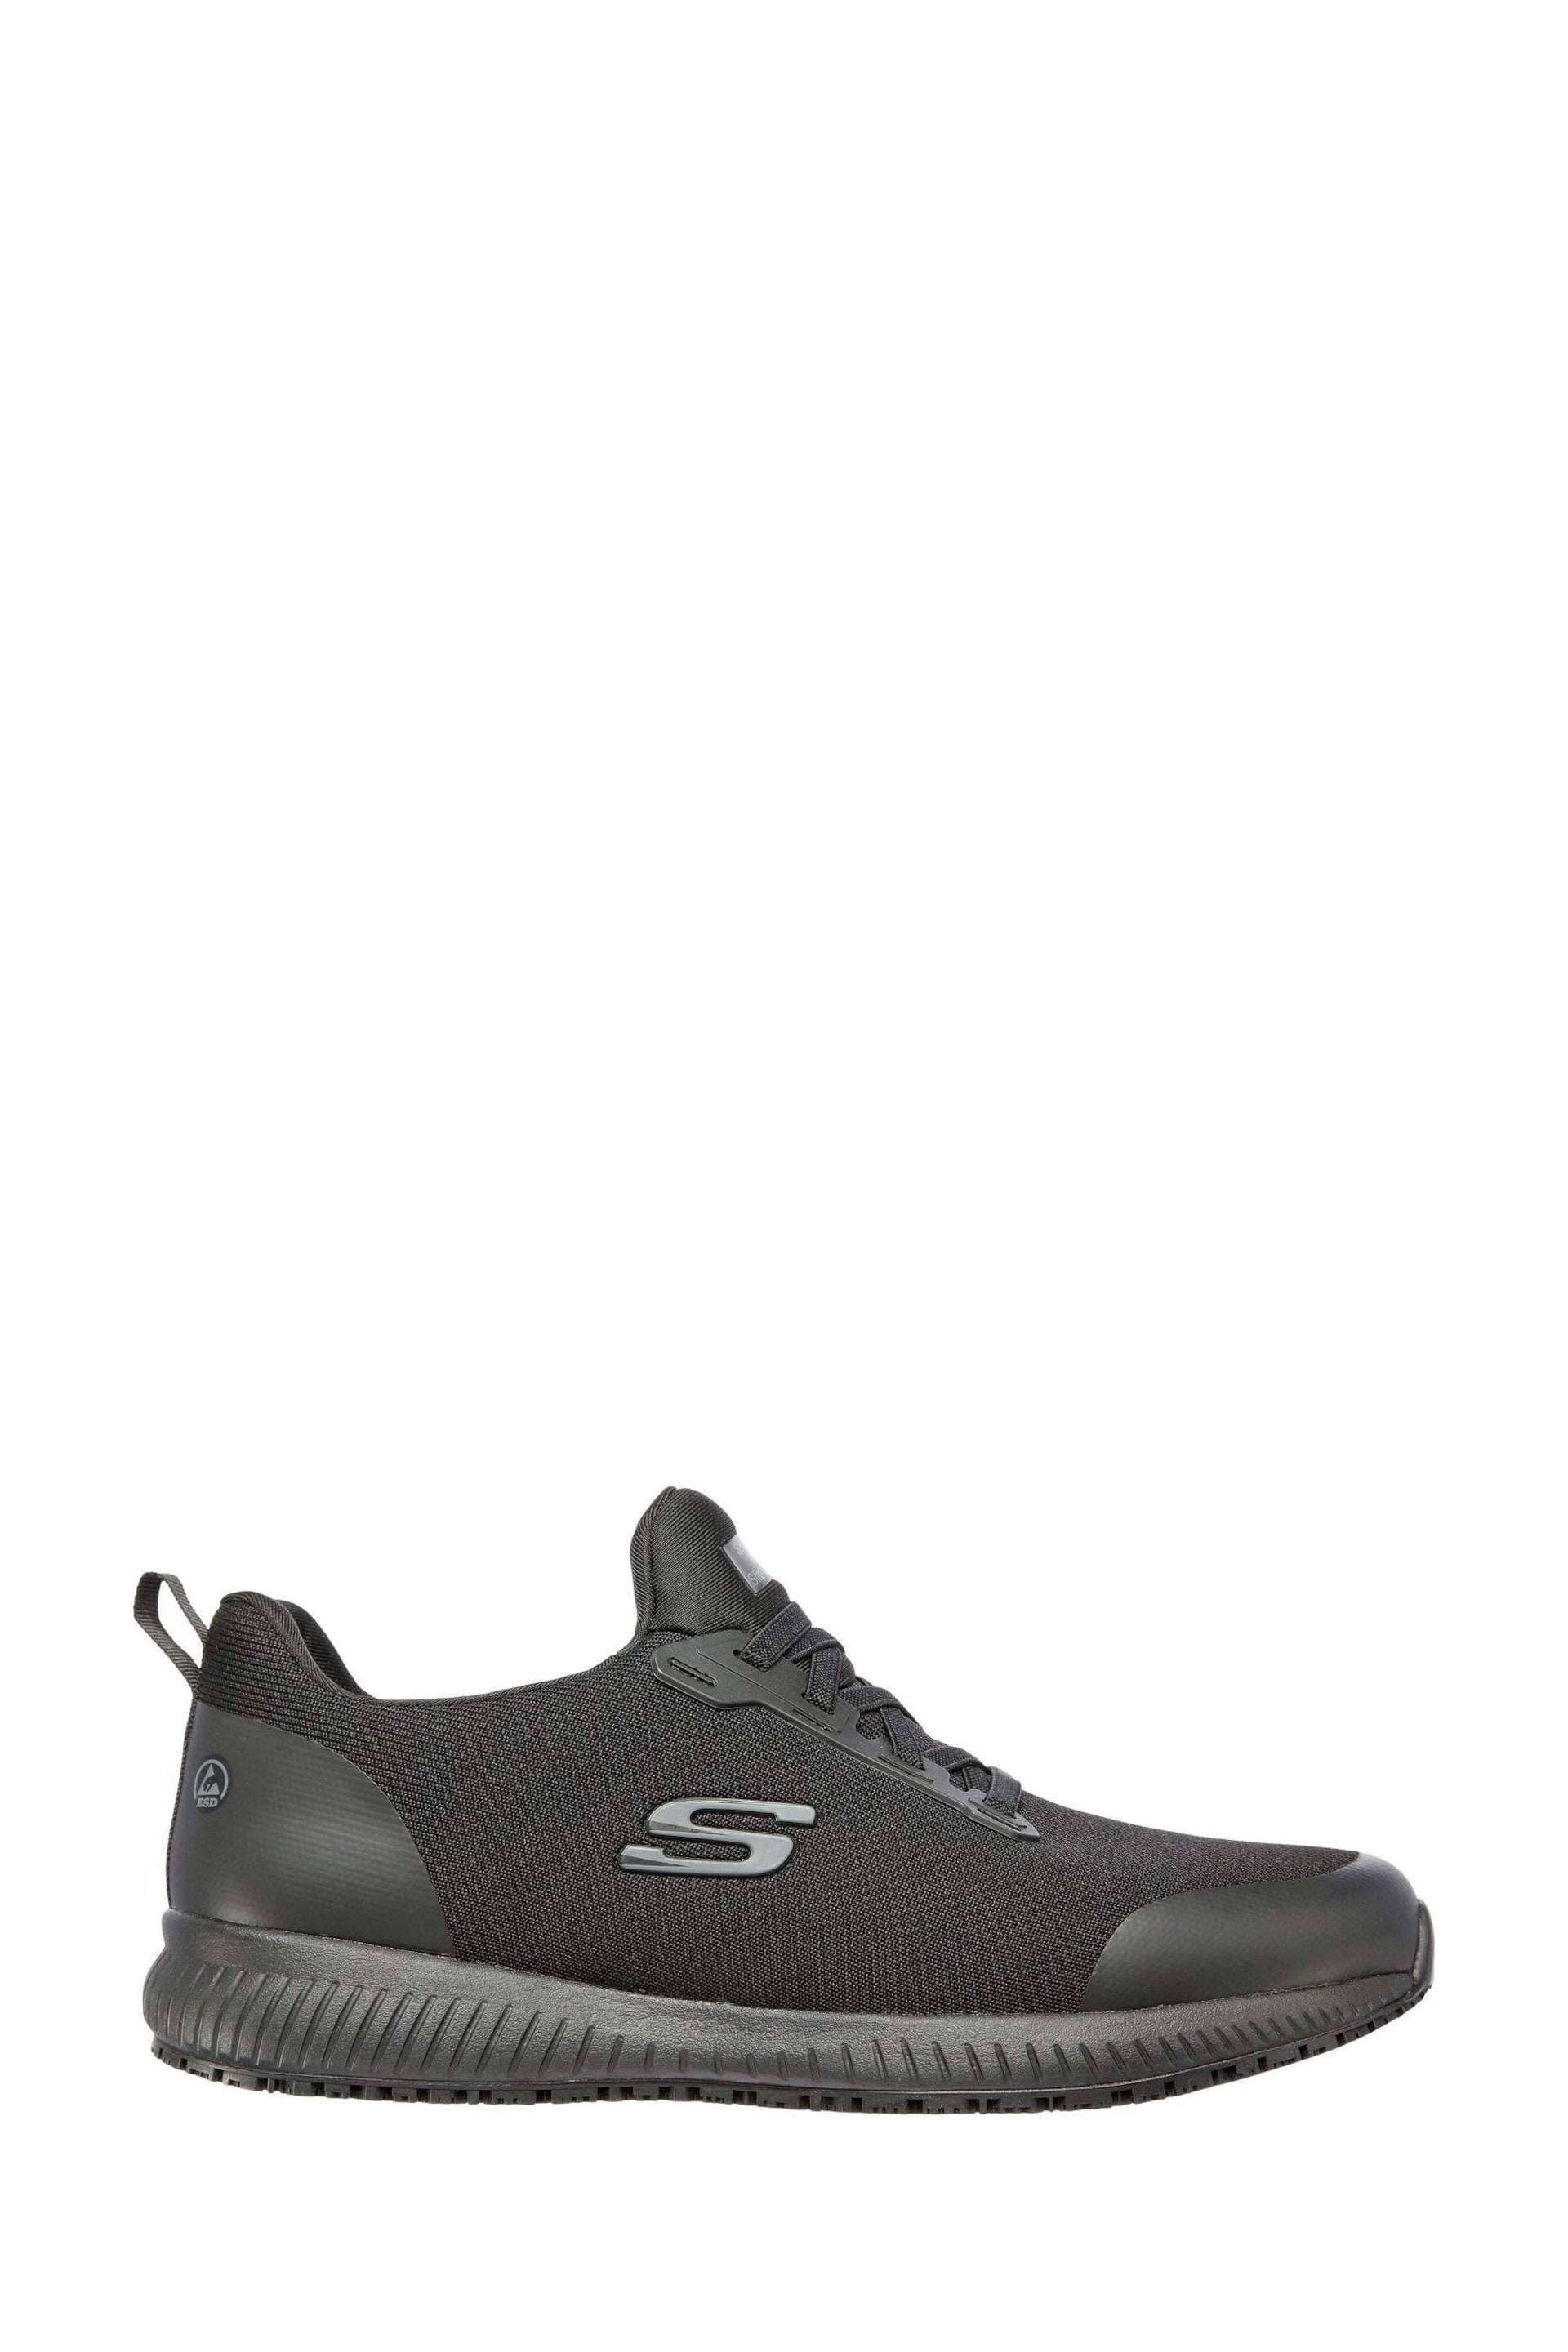 Skechers Black Squad Myton Slip Resistant Mens Trainers - Image 1 of 1